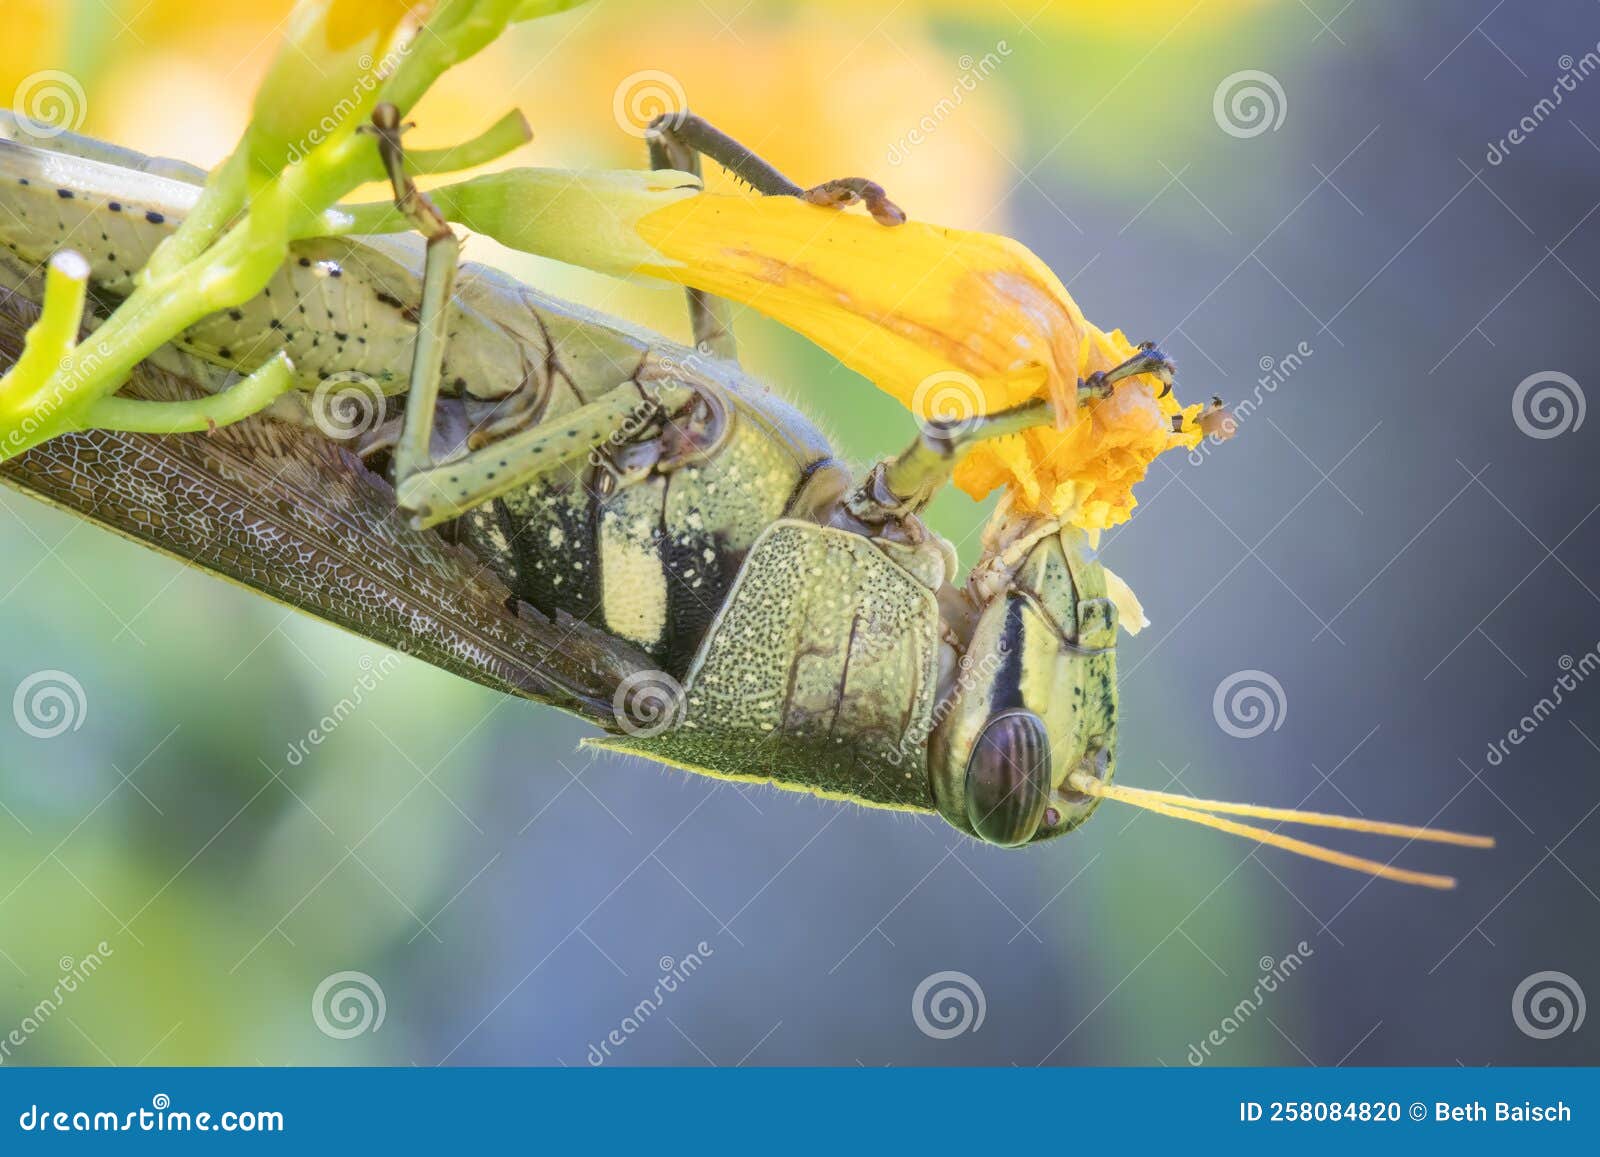 obscure bird grasshopper eating esperanza flower